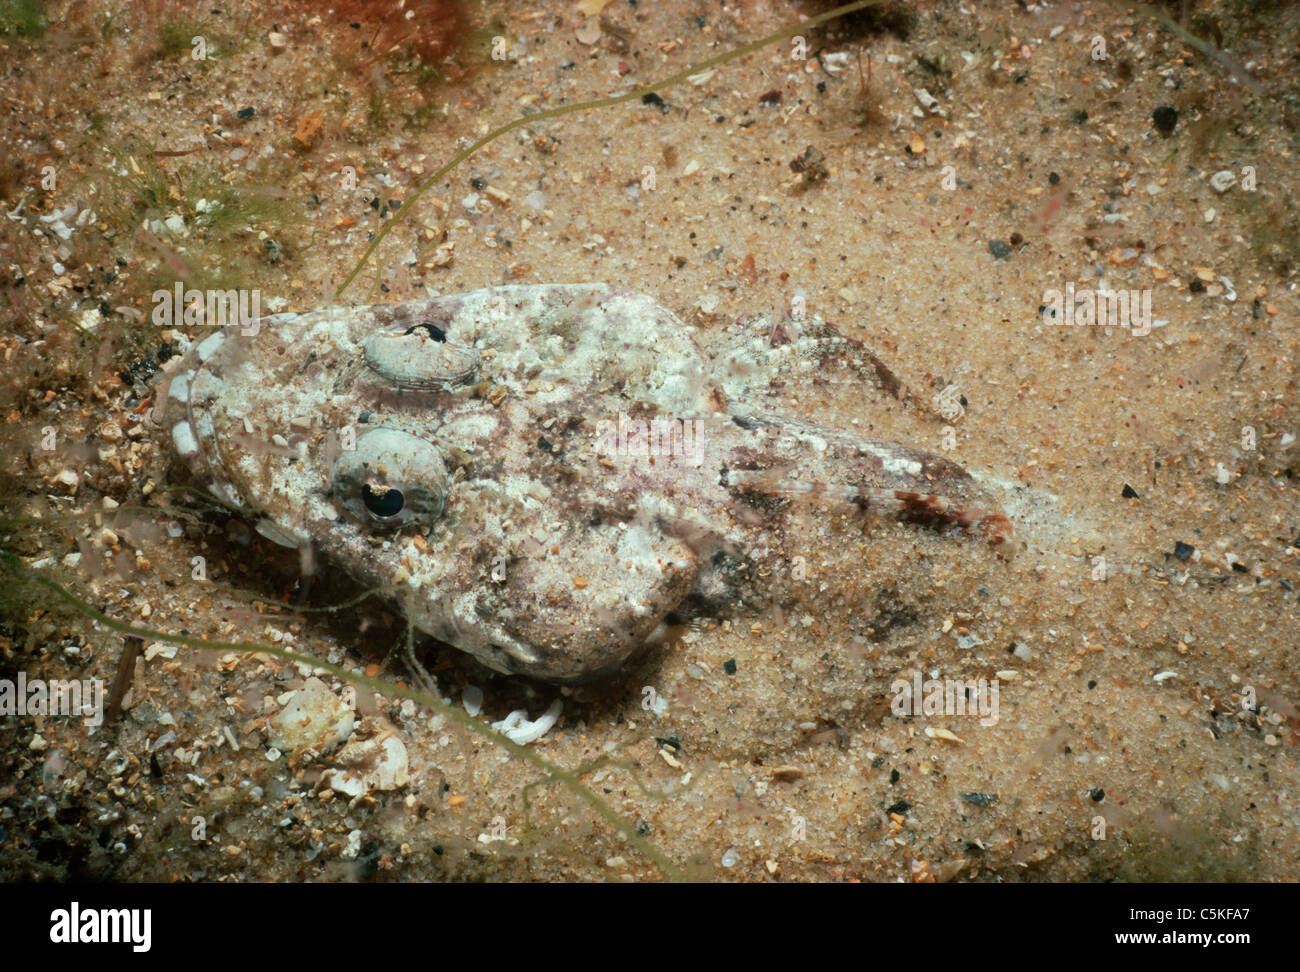 Crocodilefish (Papilloculiceps longiceps) camouflaged on sandy bottom. Egypt, Red Sea Stock Photo